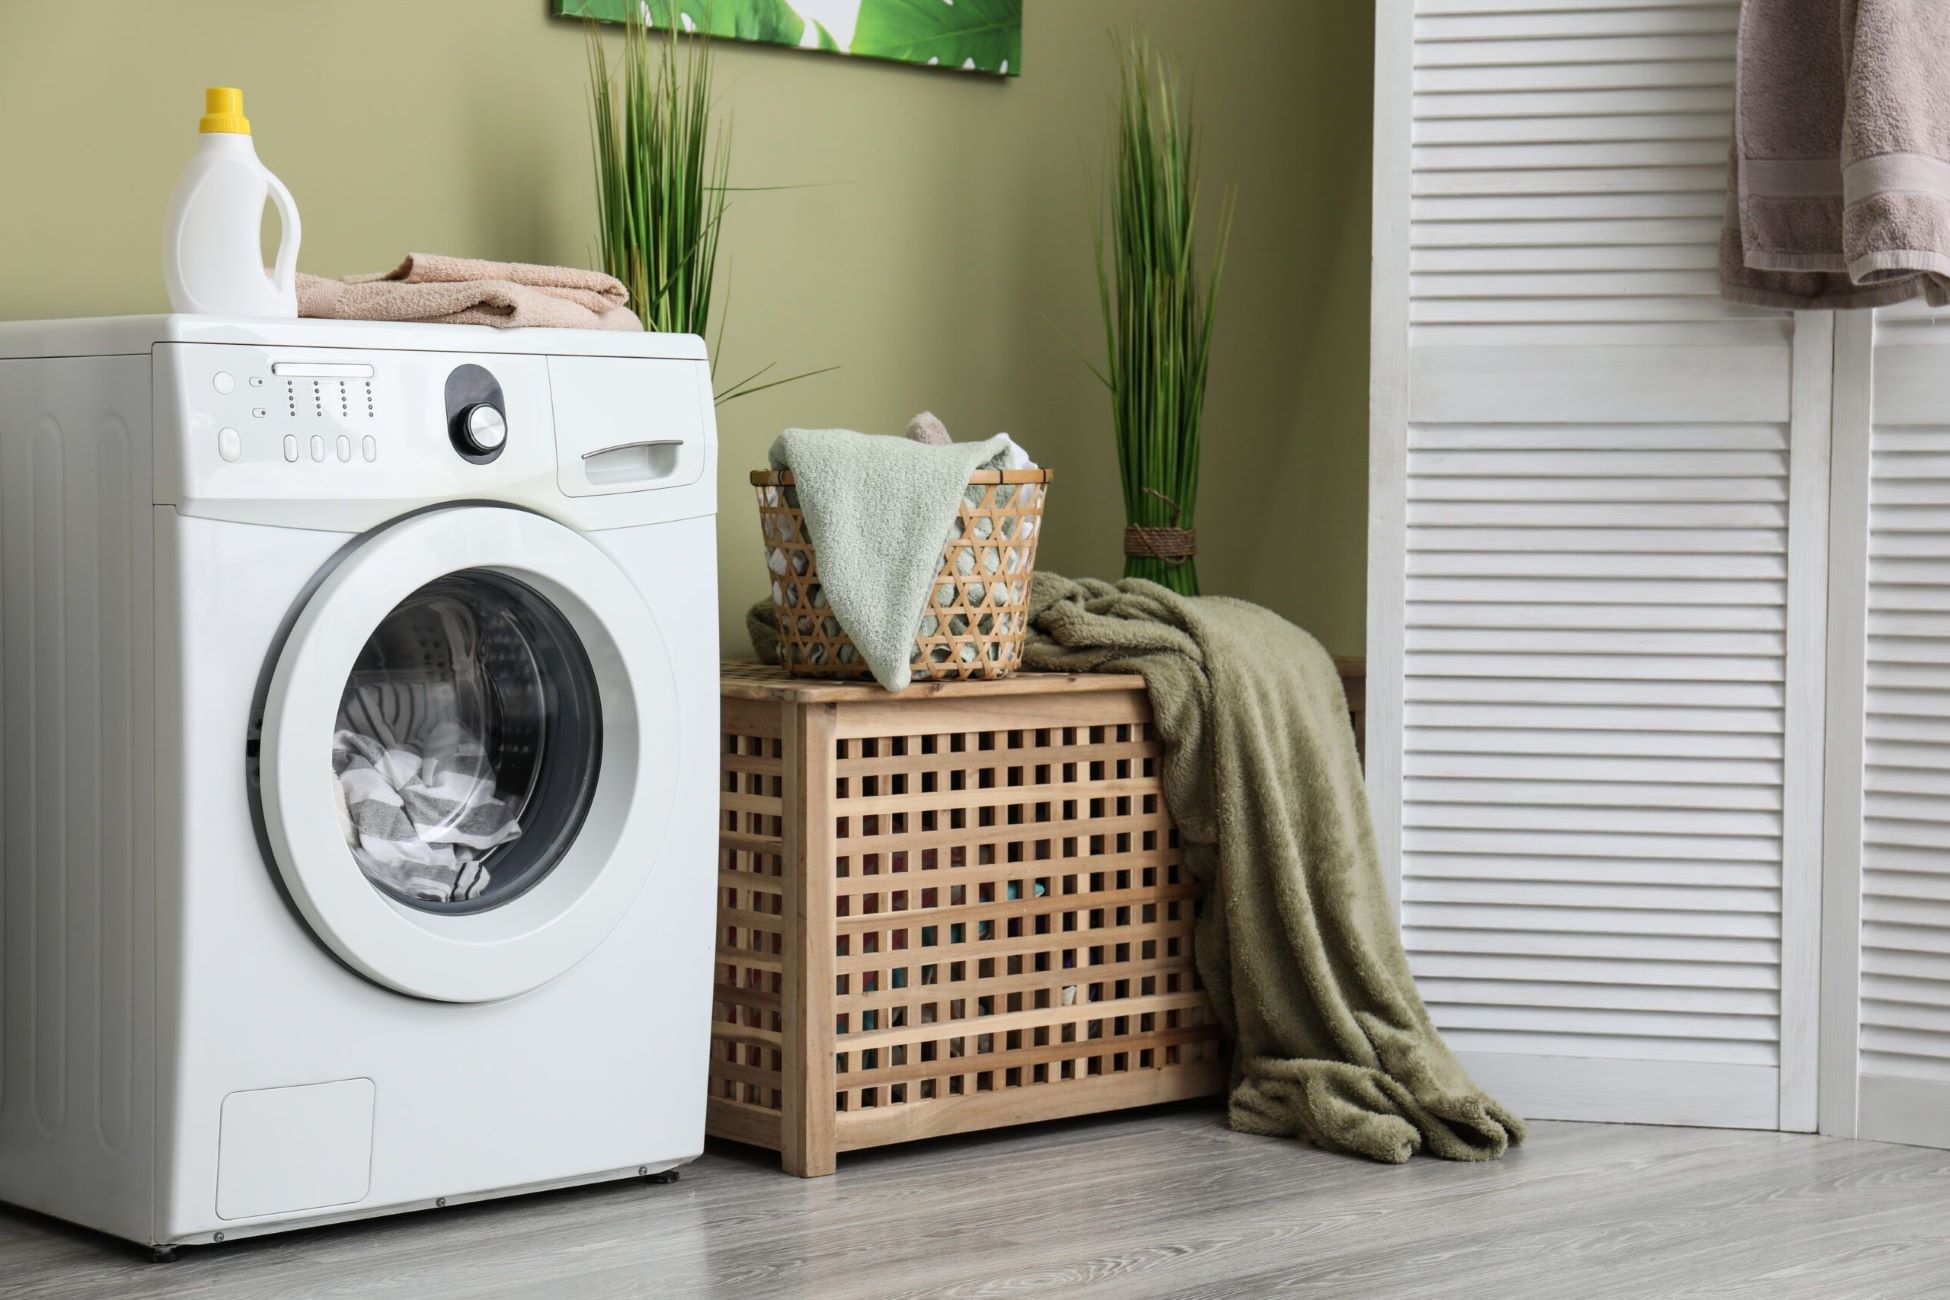 What Do Washing Machine Symbols Mean